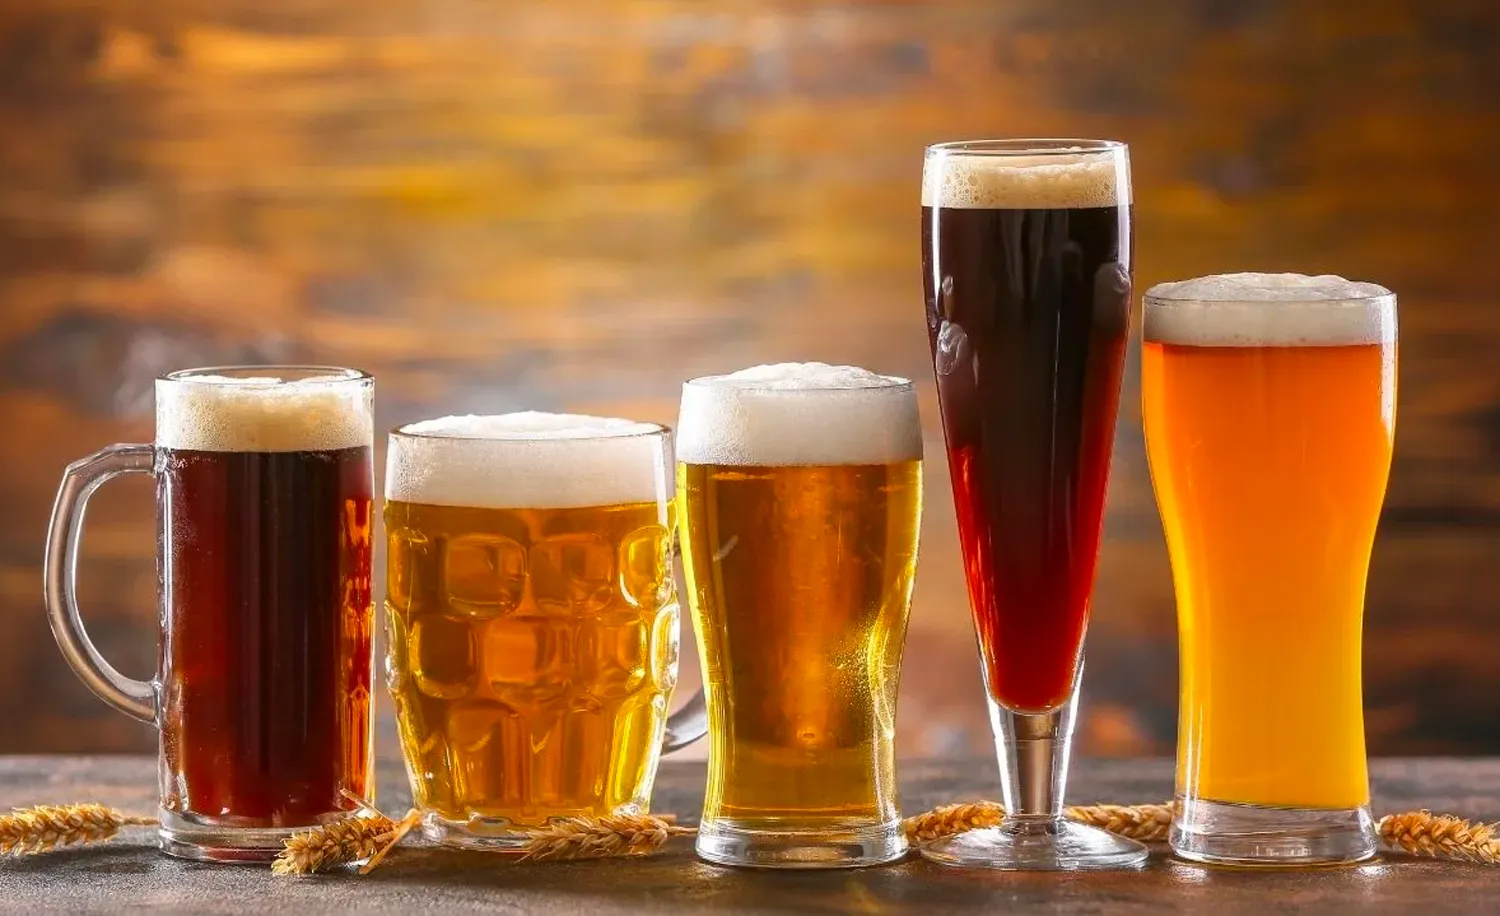 Beer sales surged in Odisha